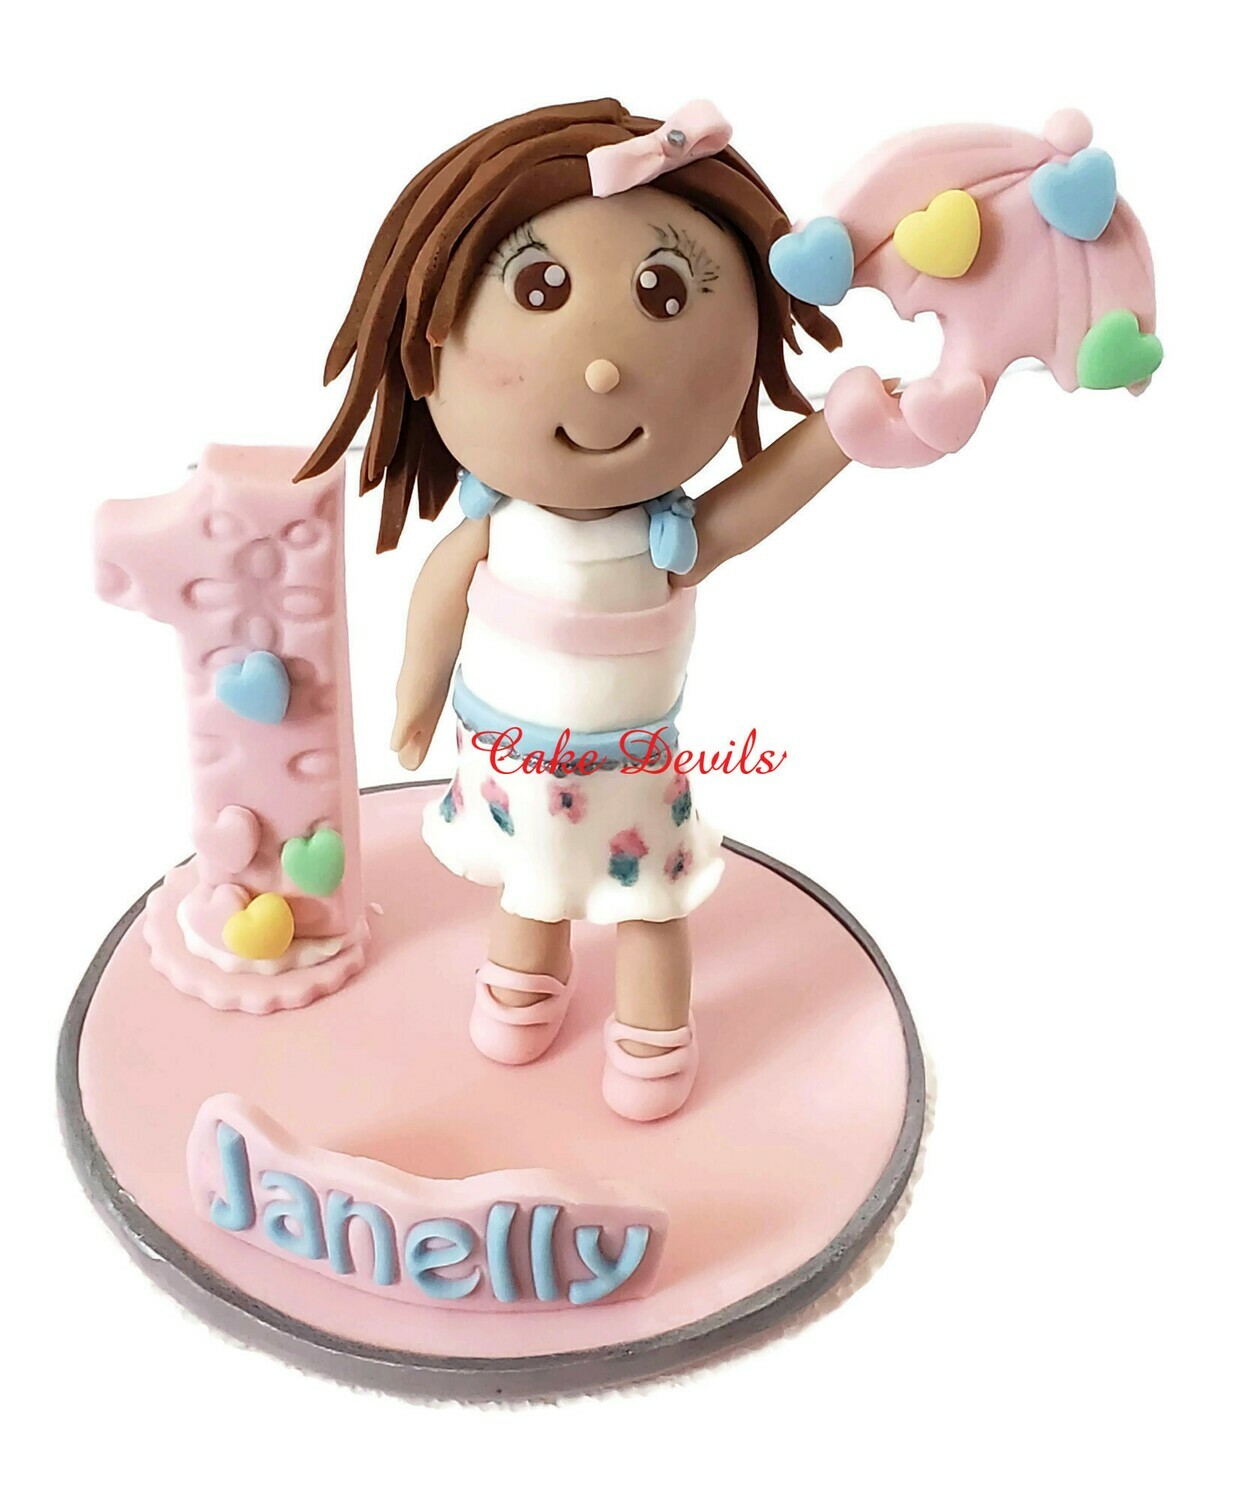 Fondant Little Girl Birthday Cake, First Birthday Cake Topper, Handmade Fondant Girl with Umbrella, Showerered with Love Birthday Party